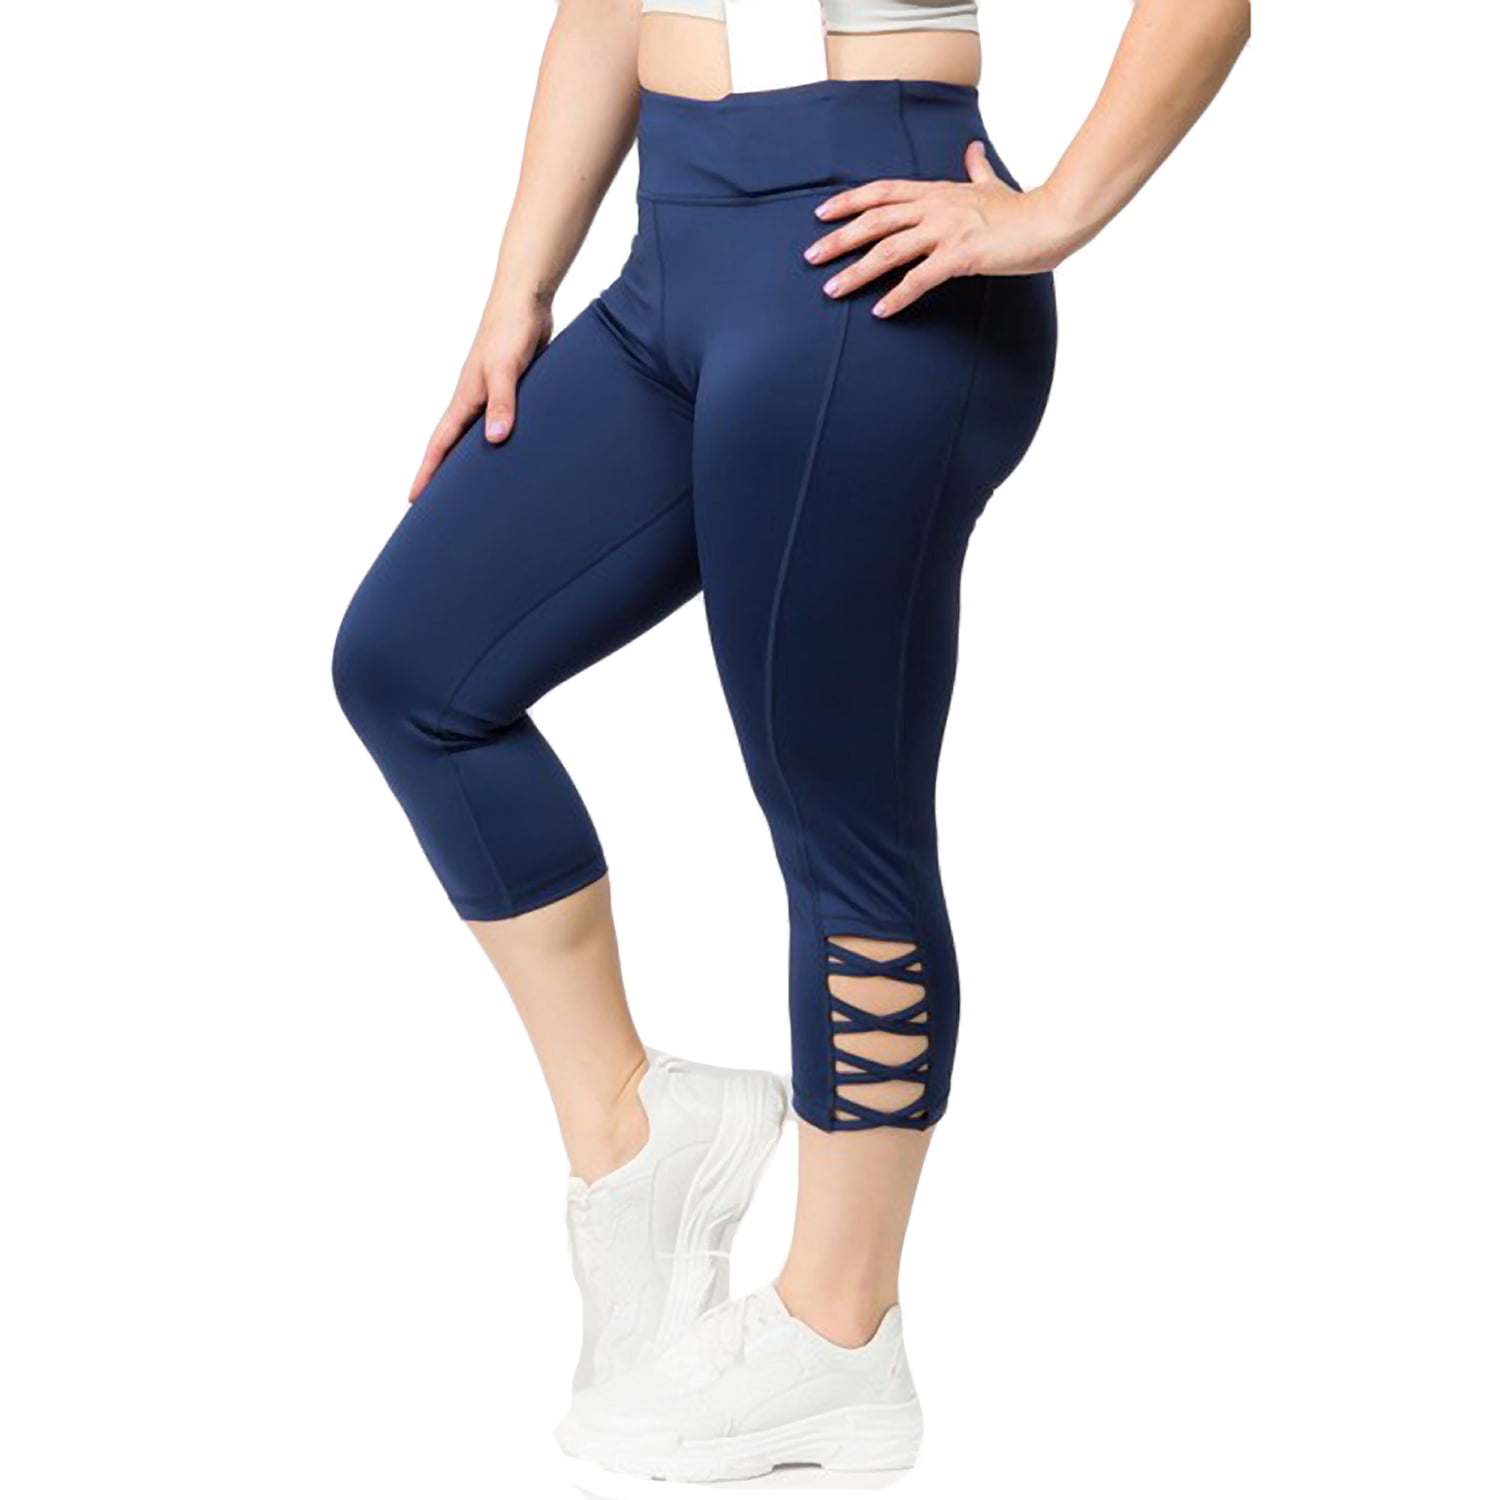 Not Today Satan Womens 3D Design Yoga Shorts Tummy Control Tights Athletic Pants